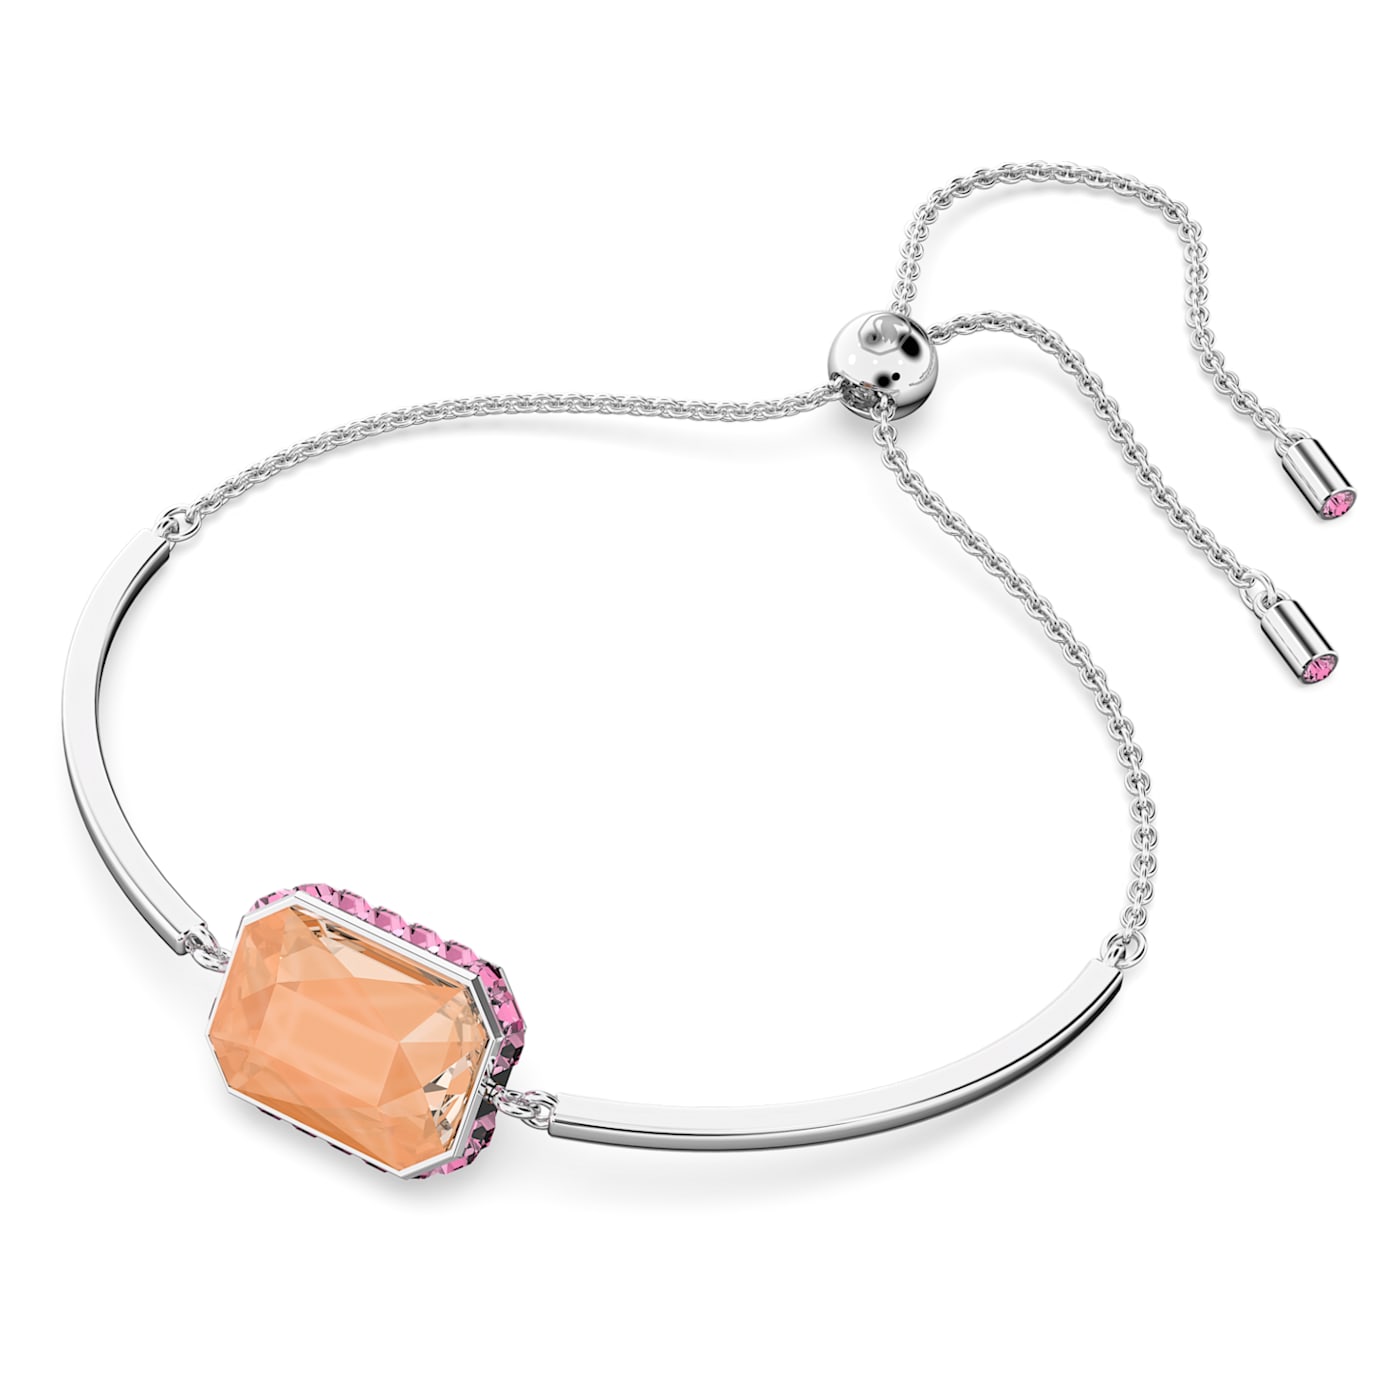 Swarovski Tennis Deluxe crystal bracelet, rose gold coloured